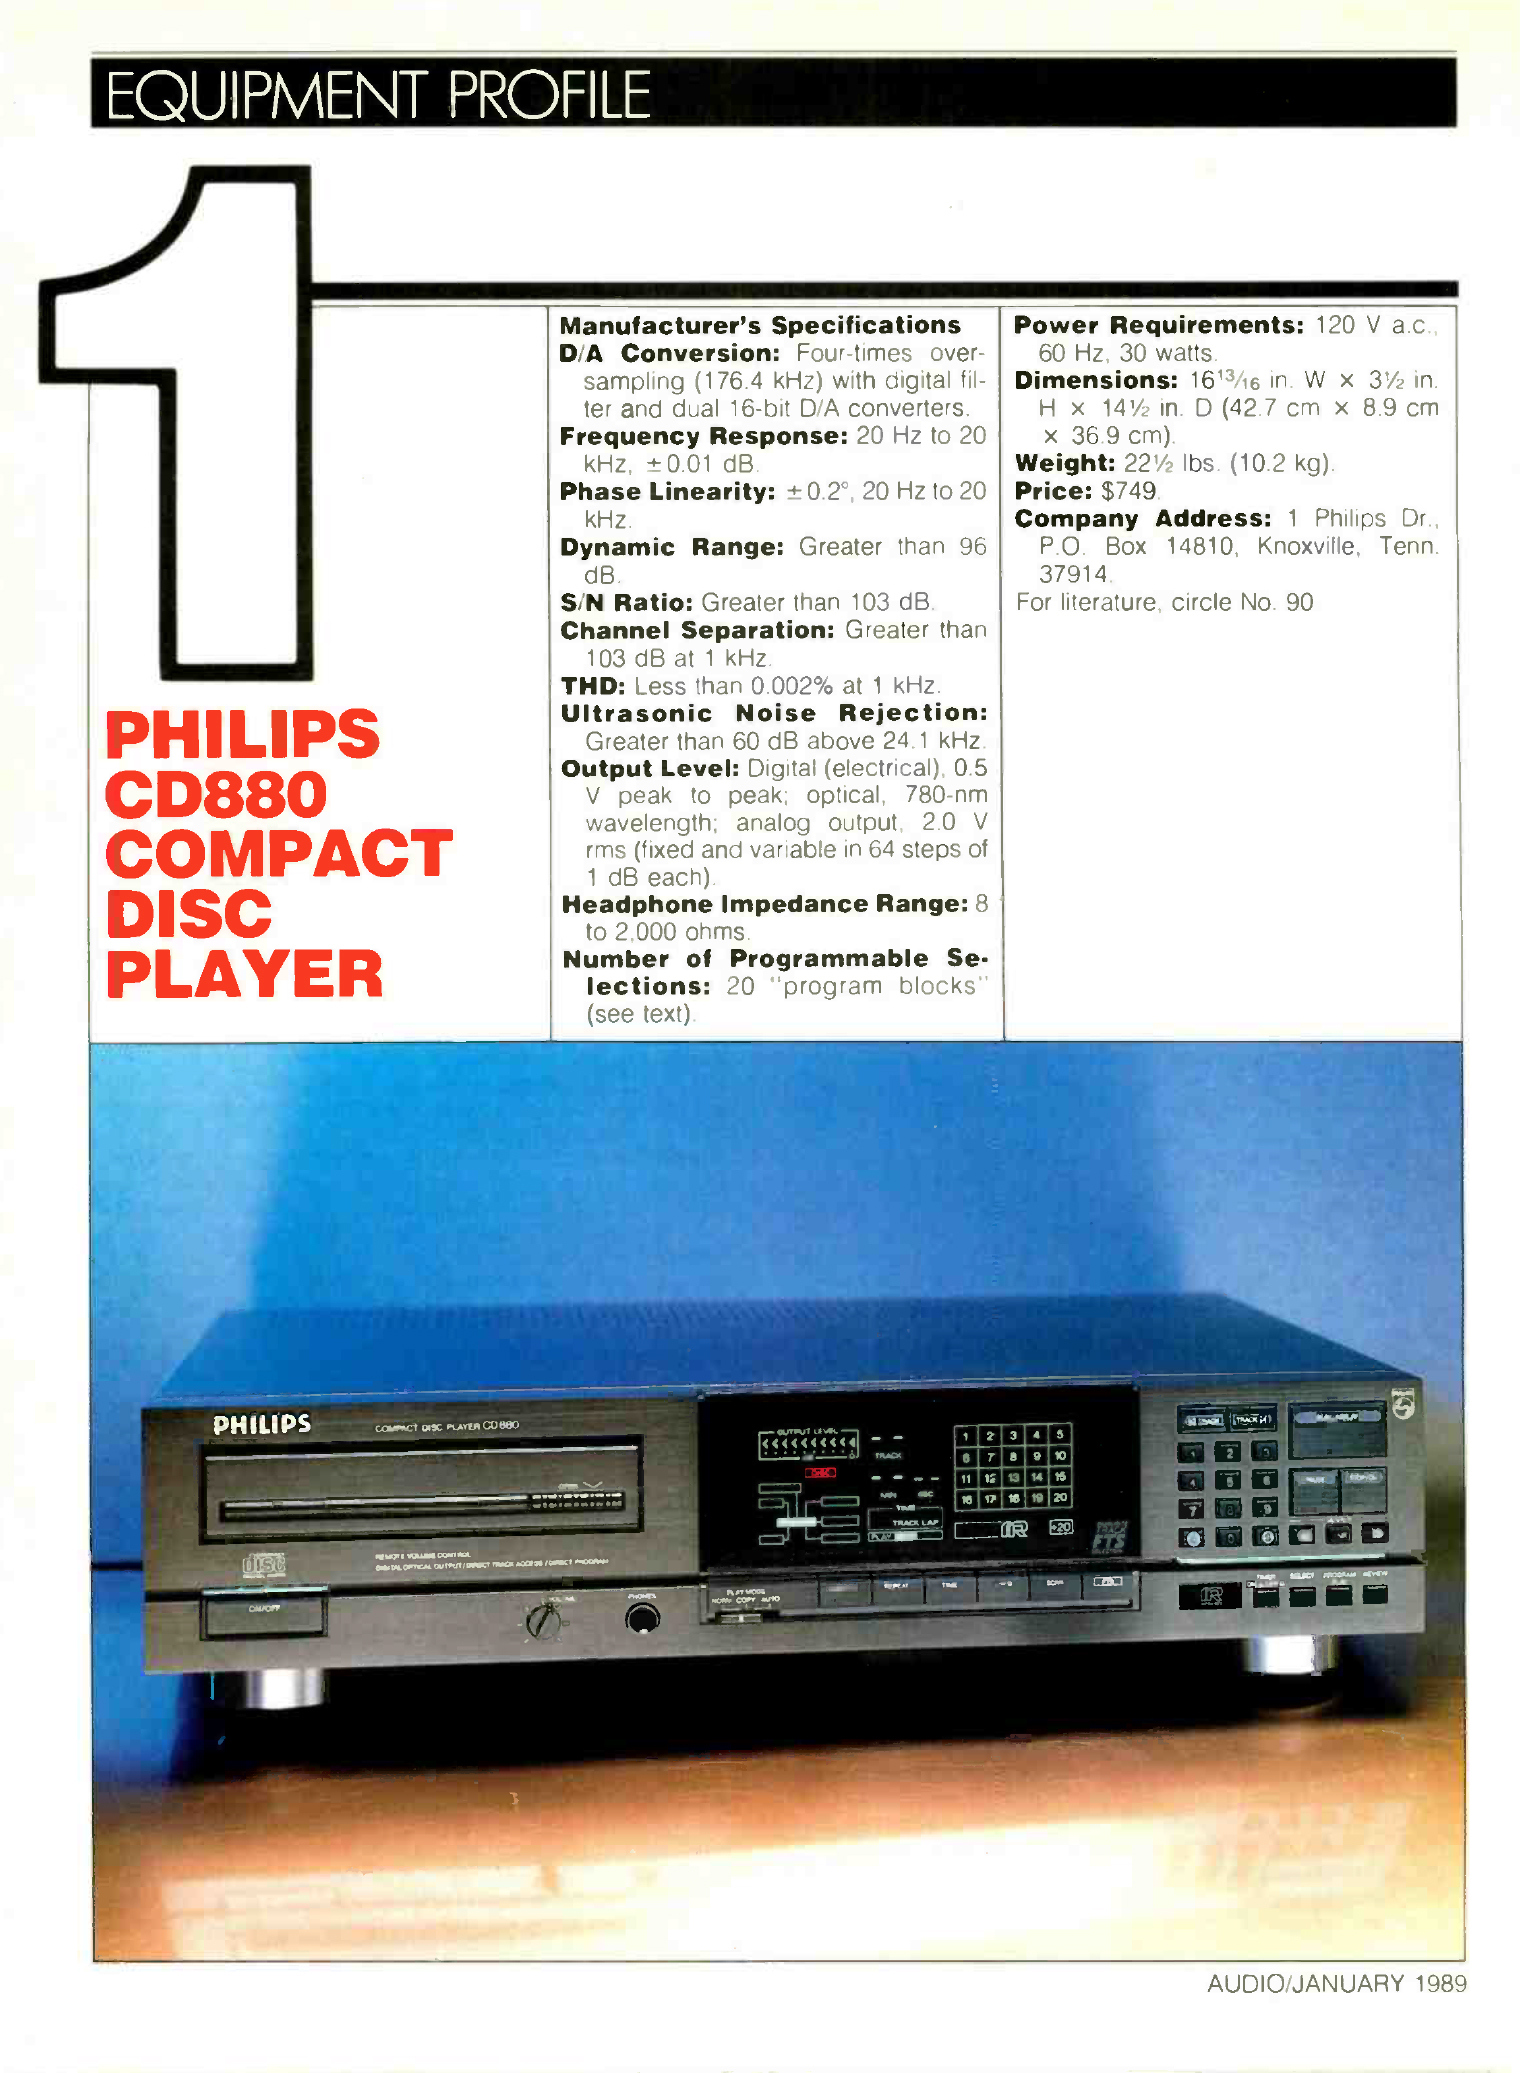 Philips CD-880-Werbung-1989.jpg